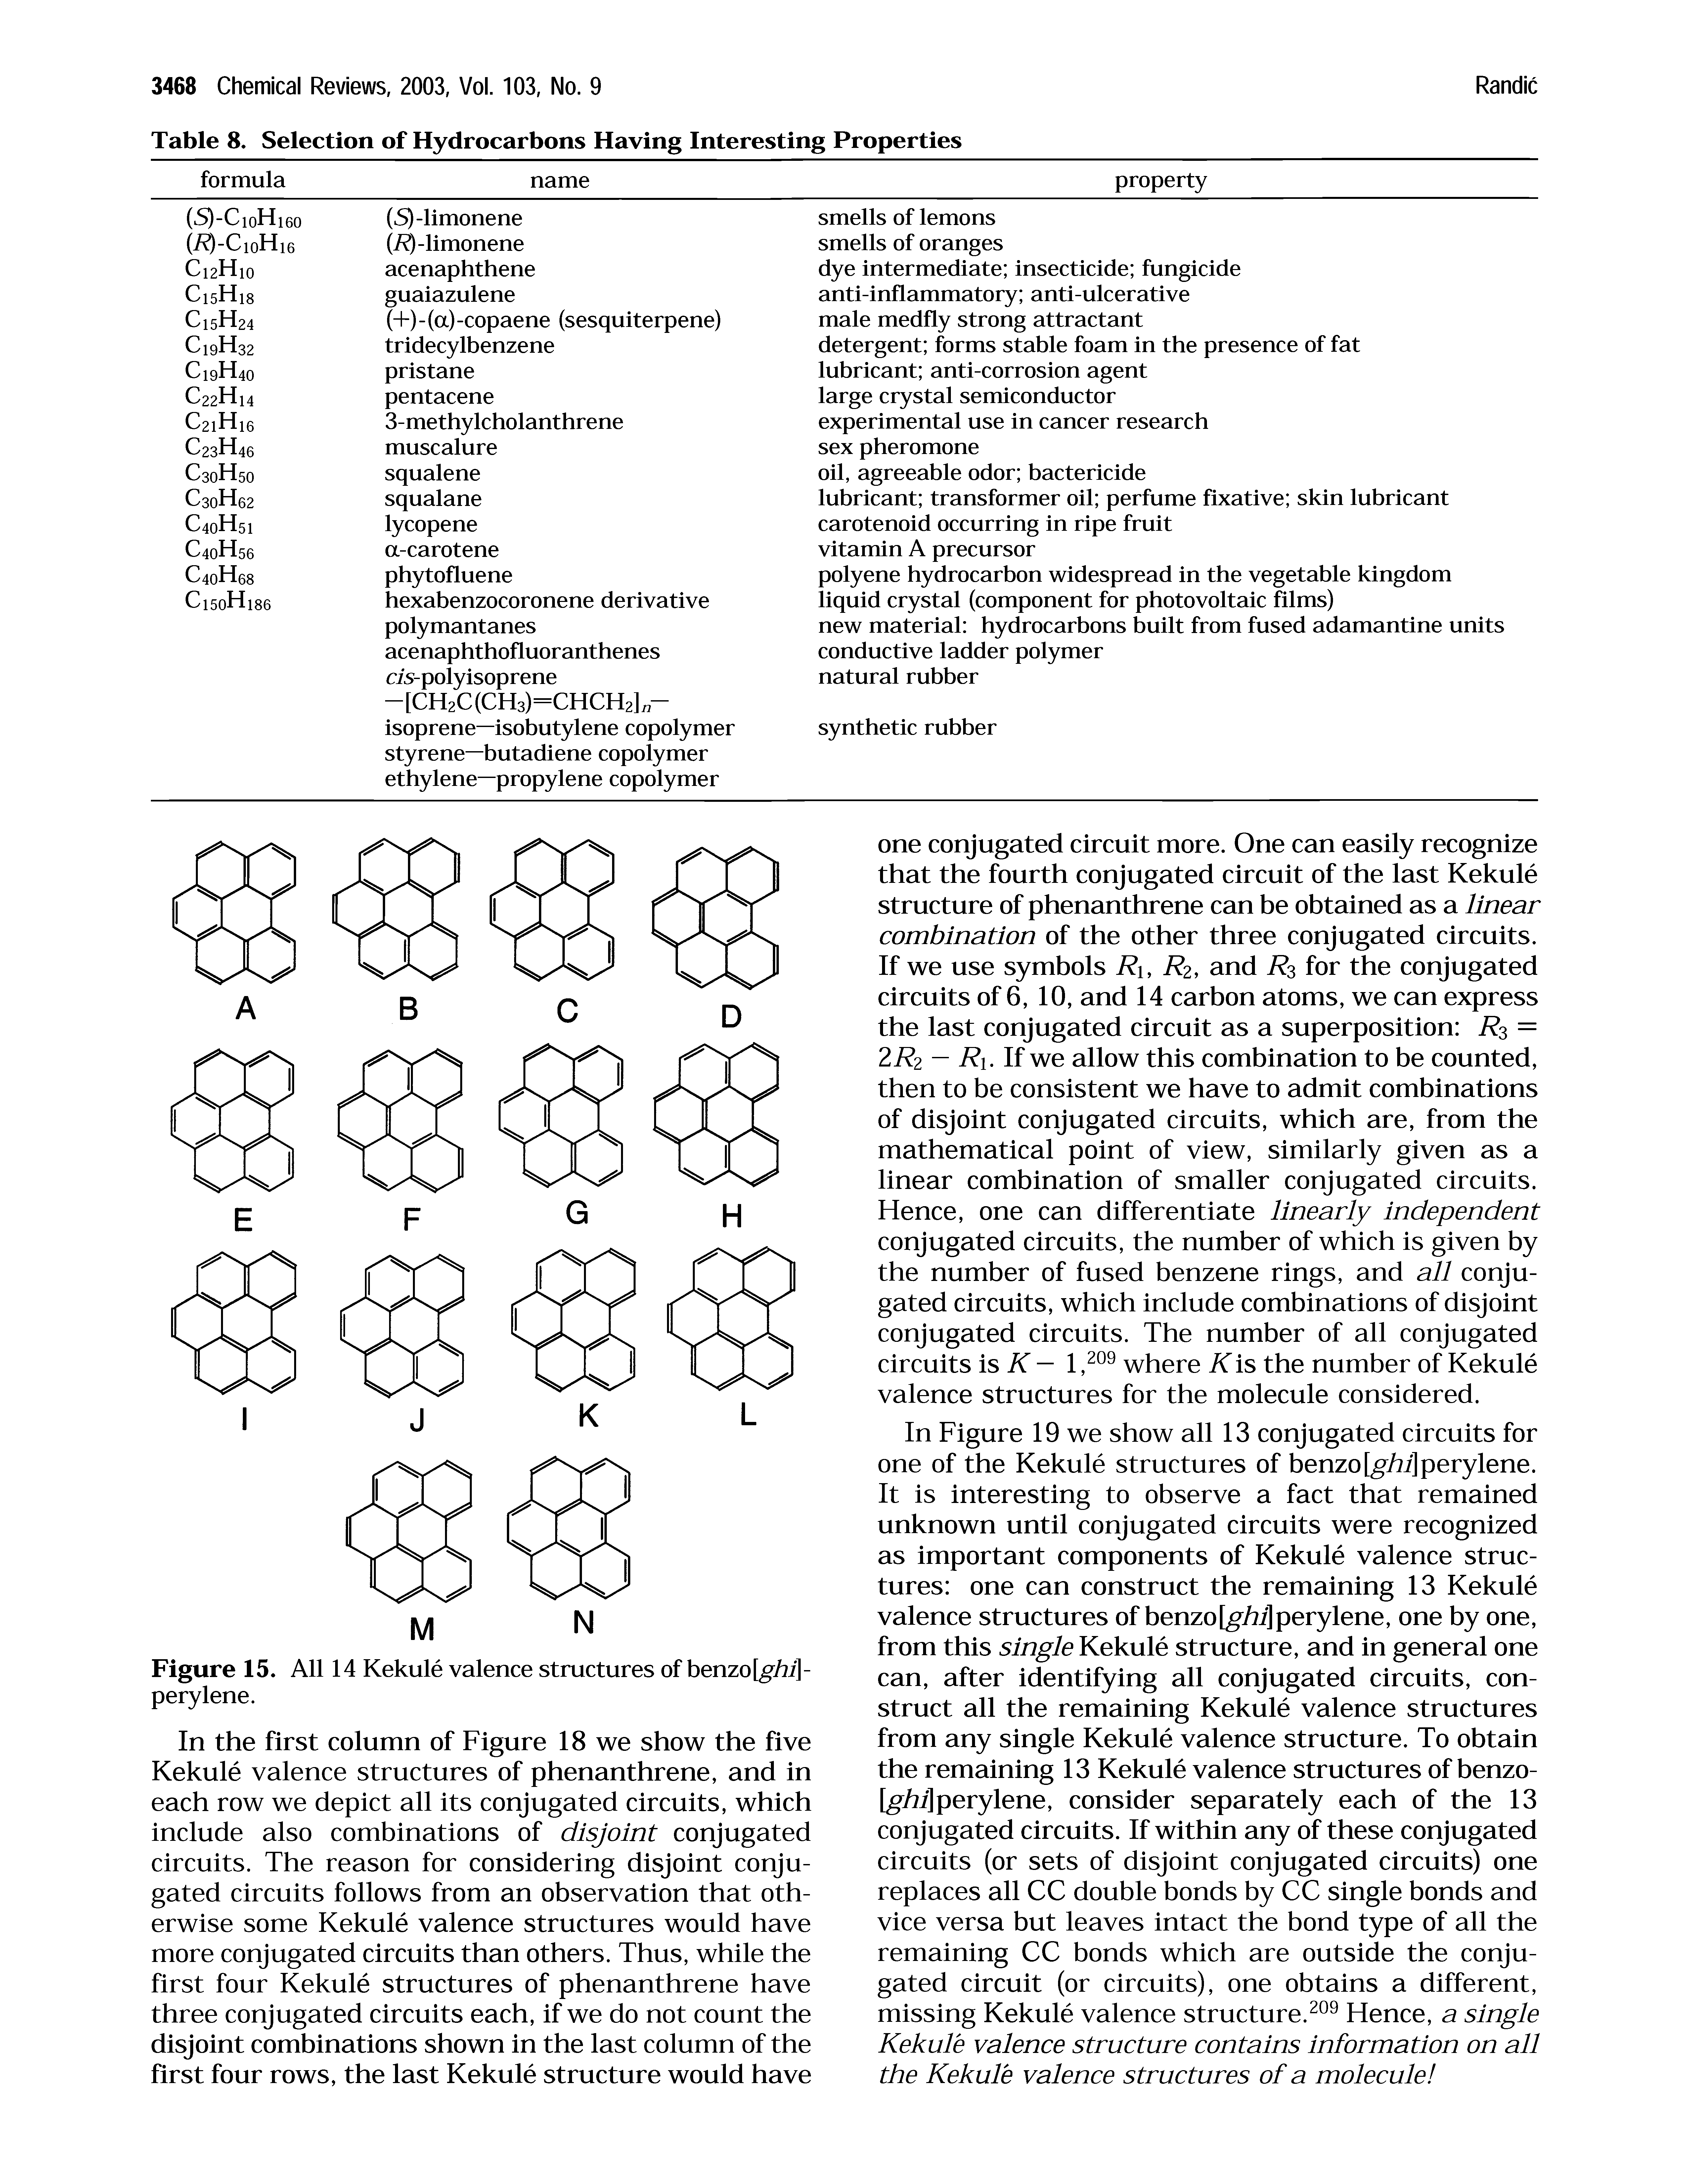 Figure 15. All 14 Kekule valence structures of benzo[ /2i]-perylene.